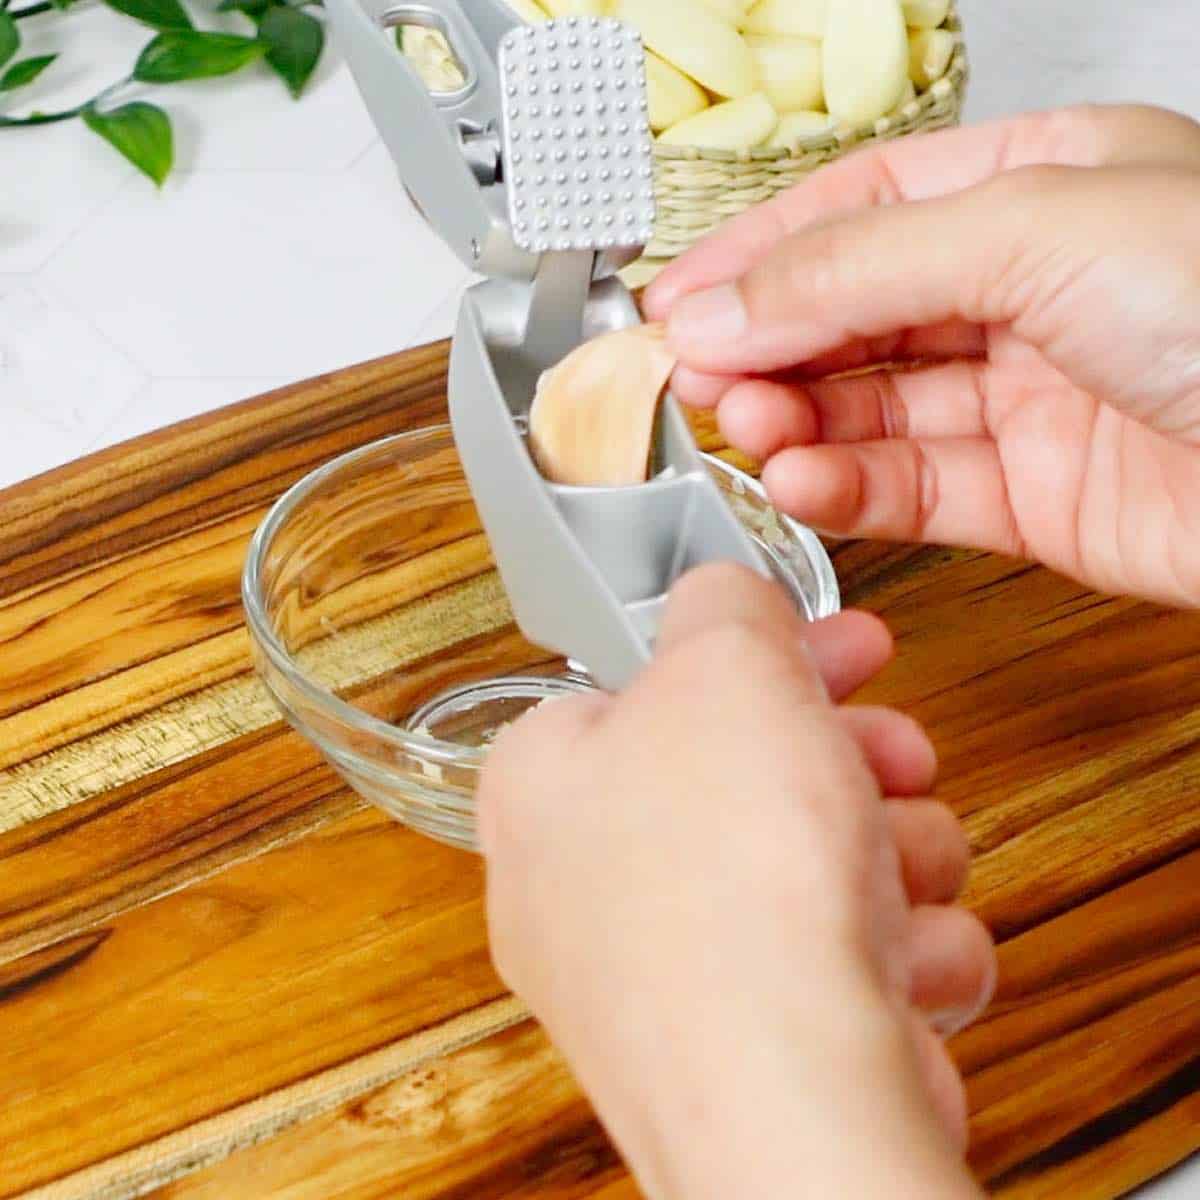 Placing an unpeeled garlic clove in a garlic press.